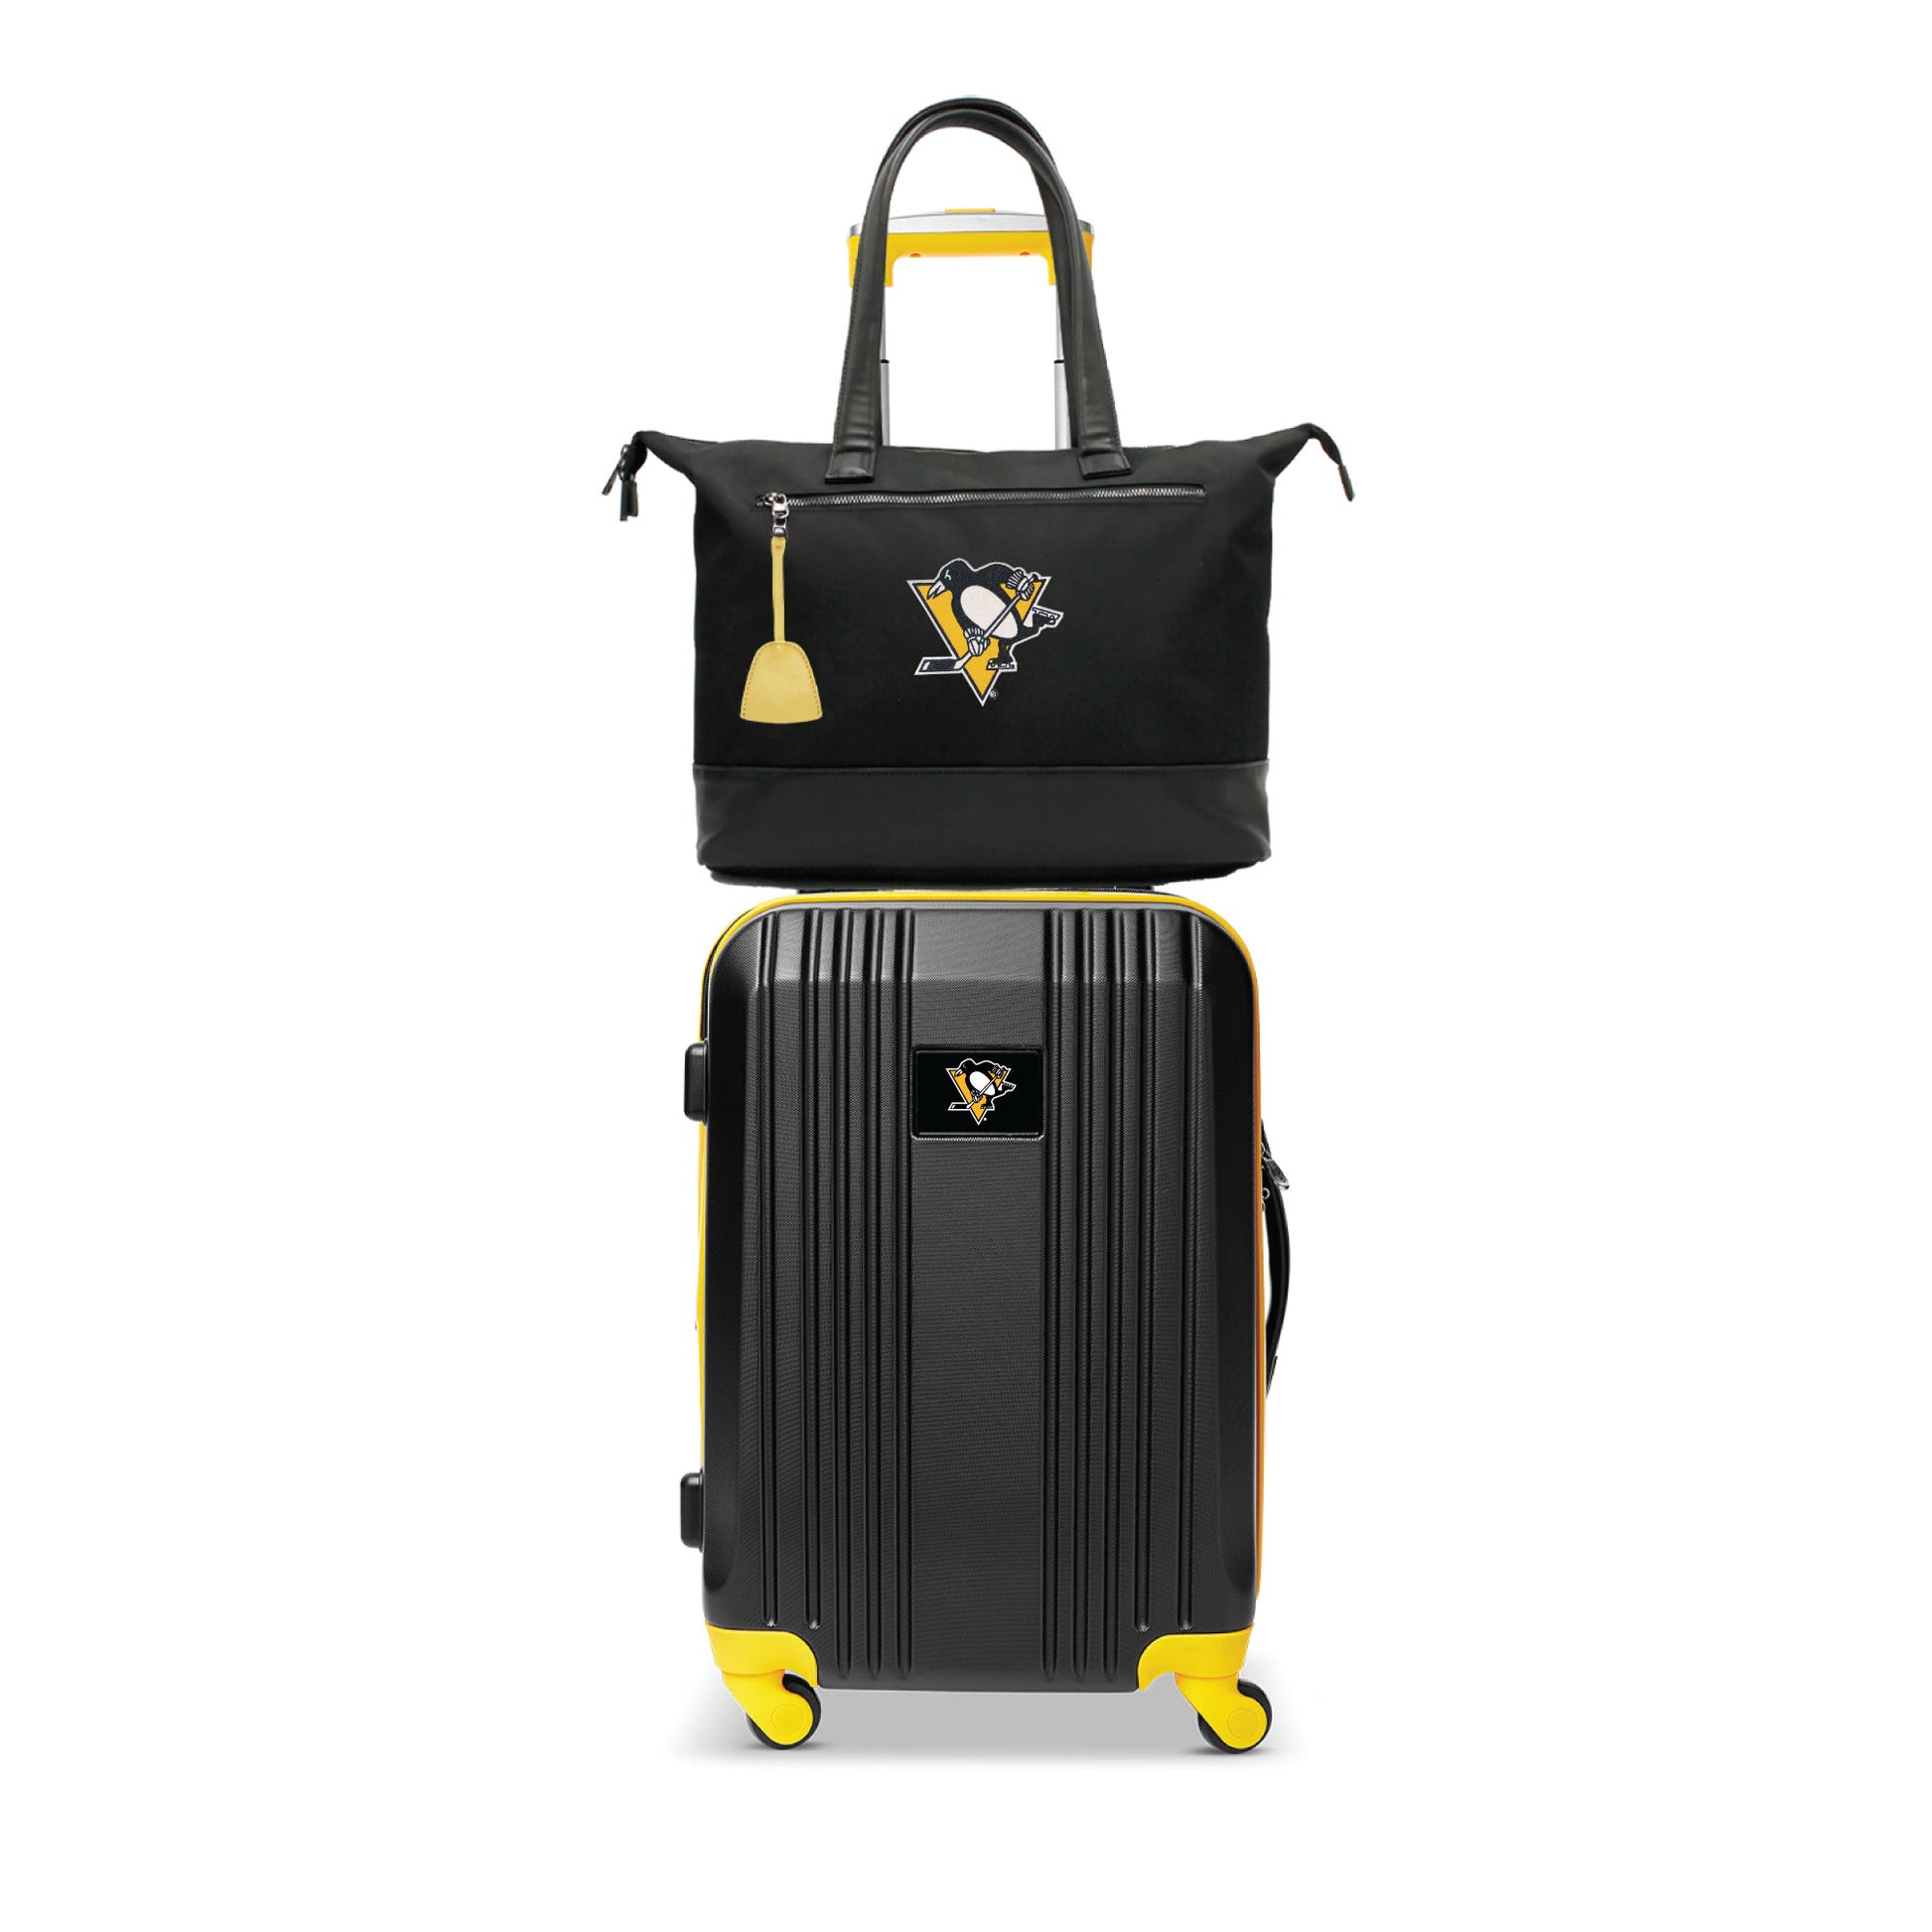 Pittsburgh Penguins Premium Laptop Tote Bag and Luggage Set